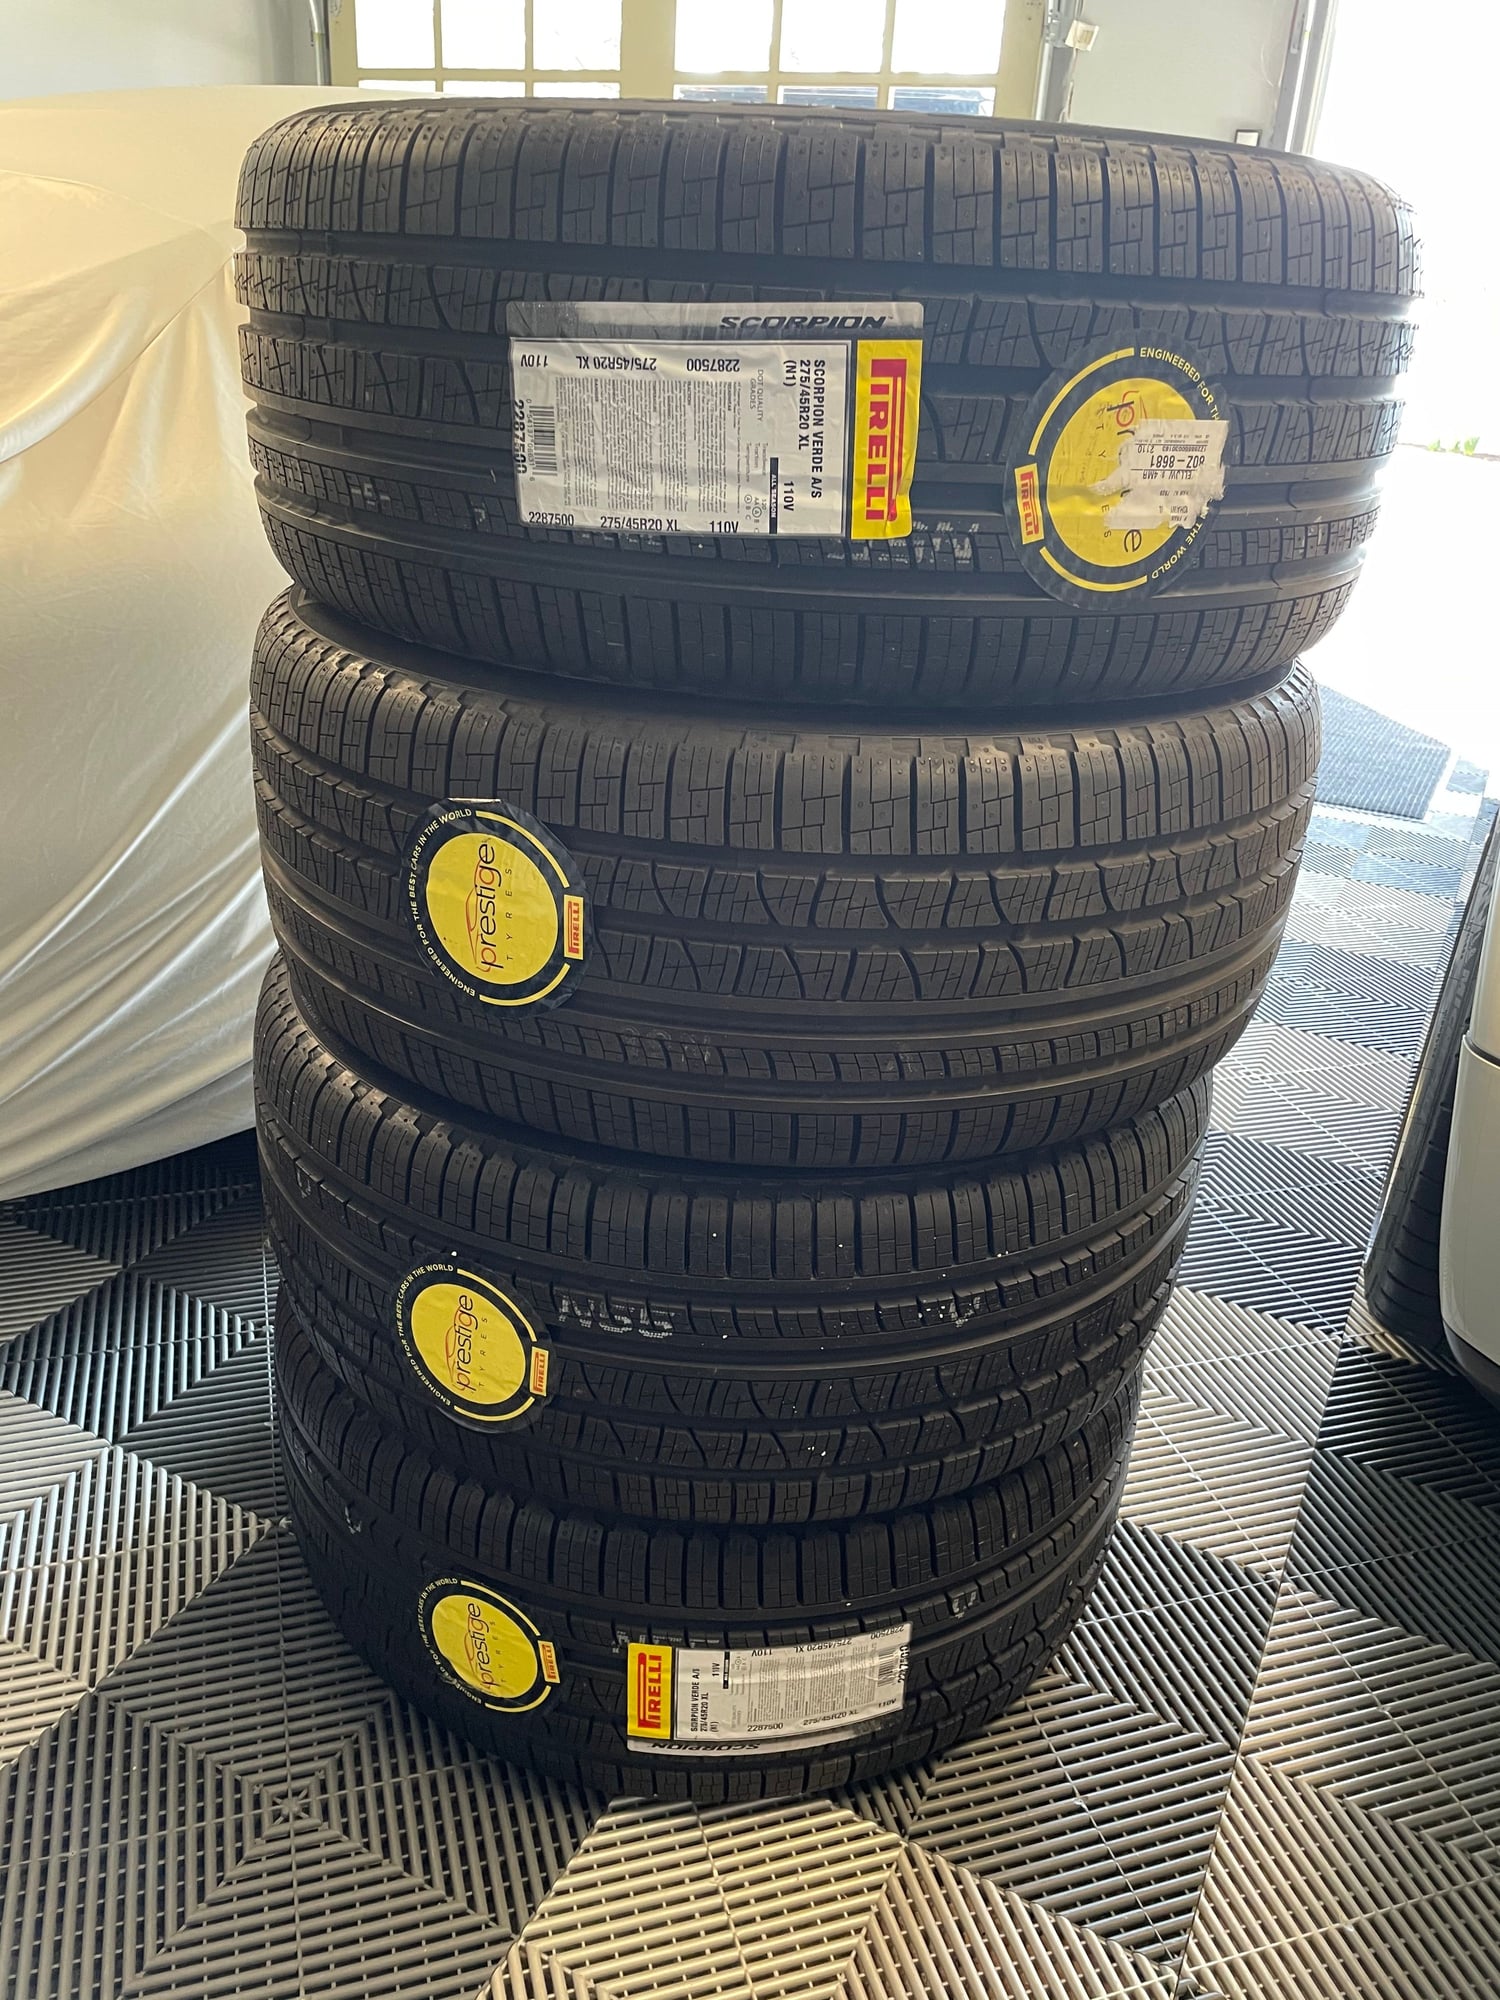 Wheels and Tires/Axles - 275/45R-20 Pirelli Scorpion Verde N1 - New - 2015 to 2018 Porsche Cayenne - Chatham, NJ 07928, United States